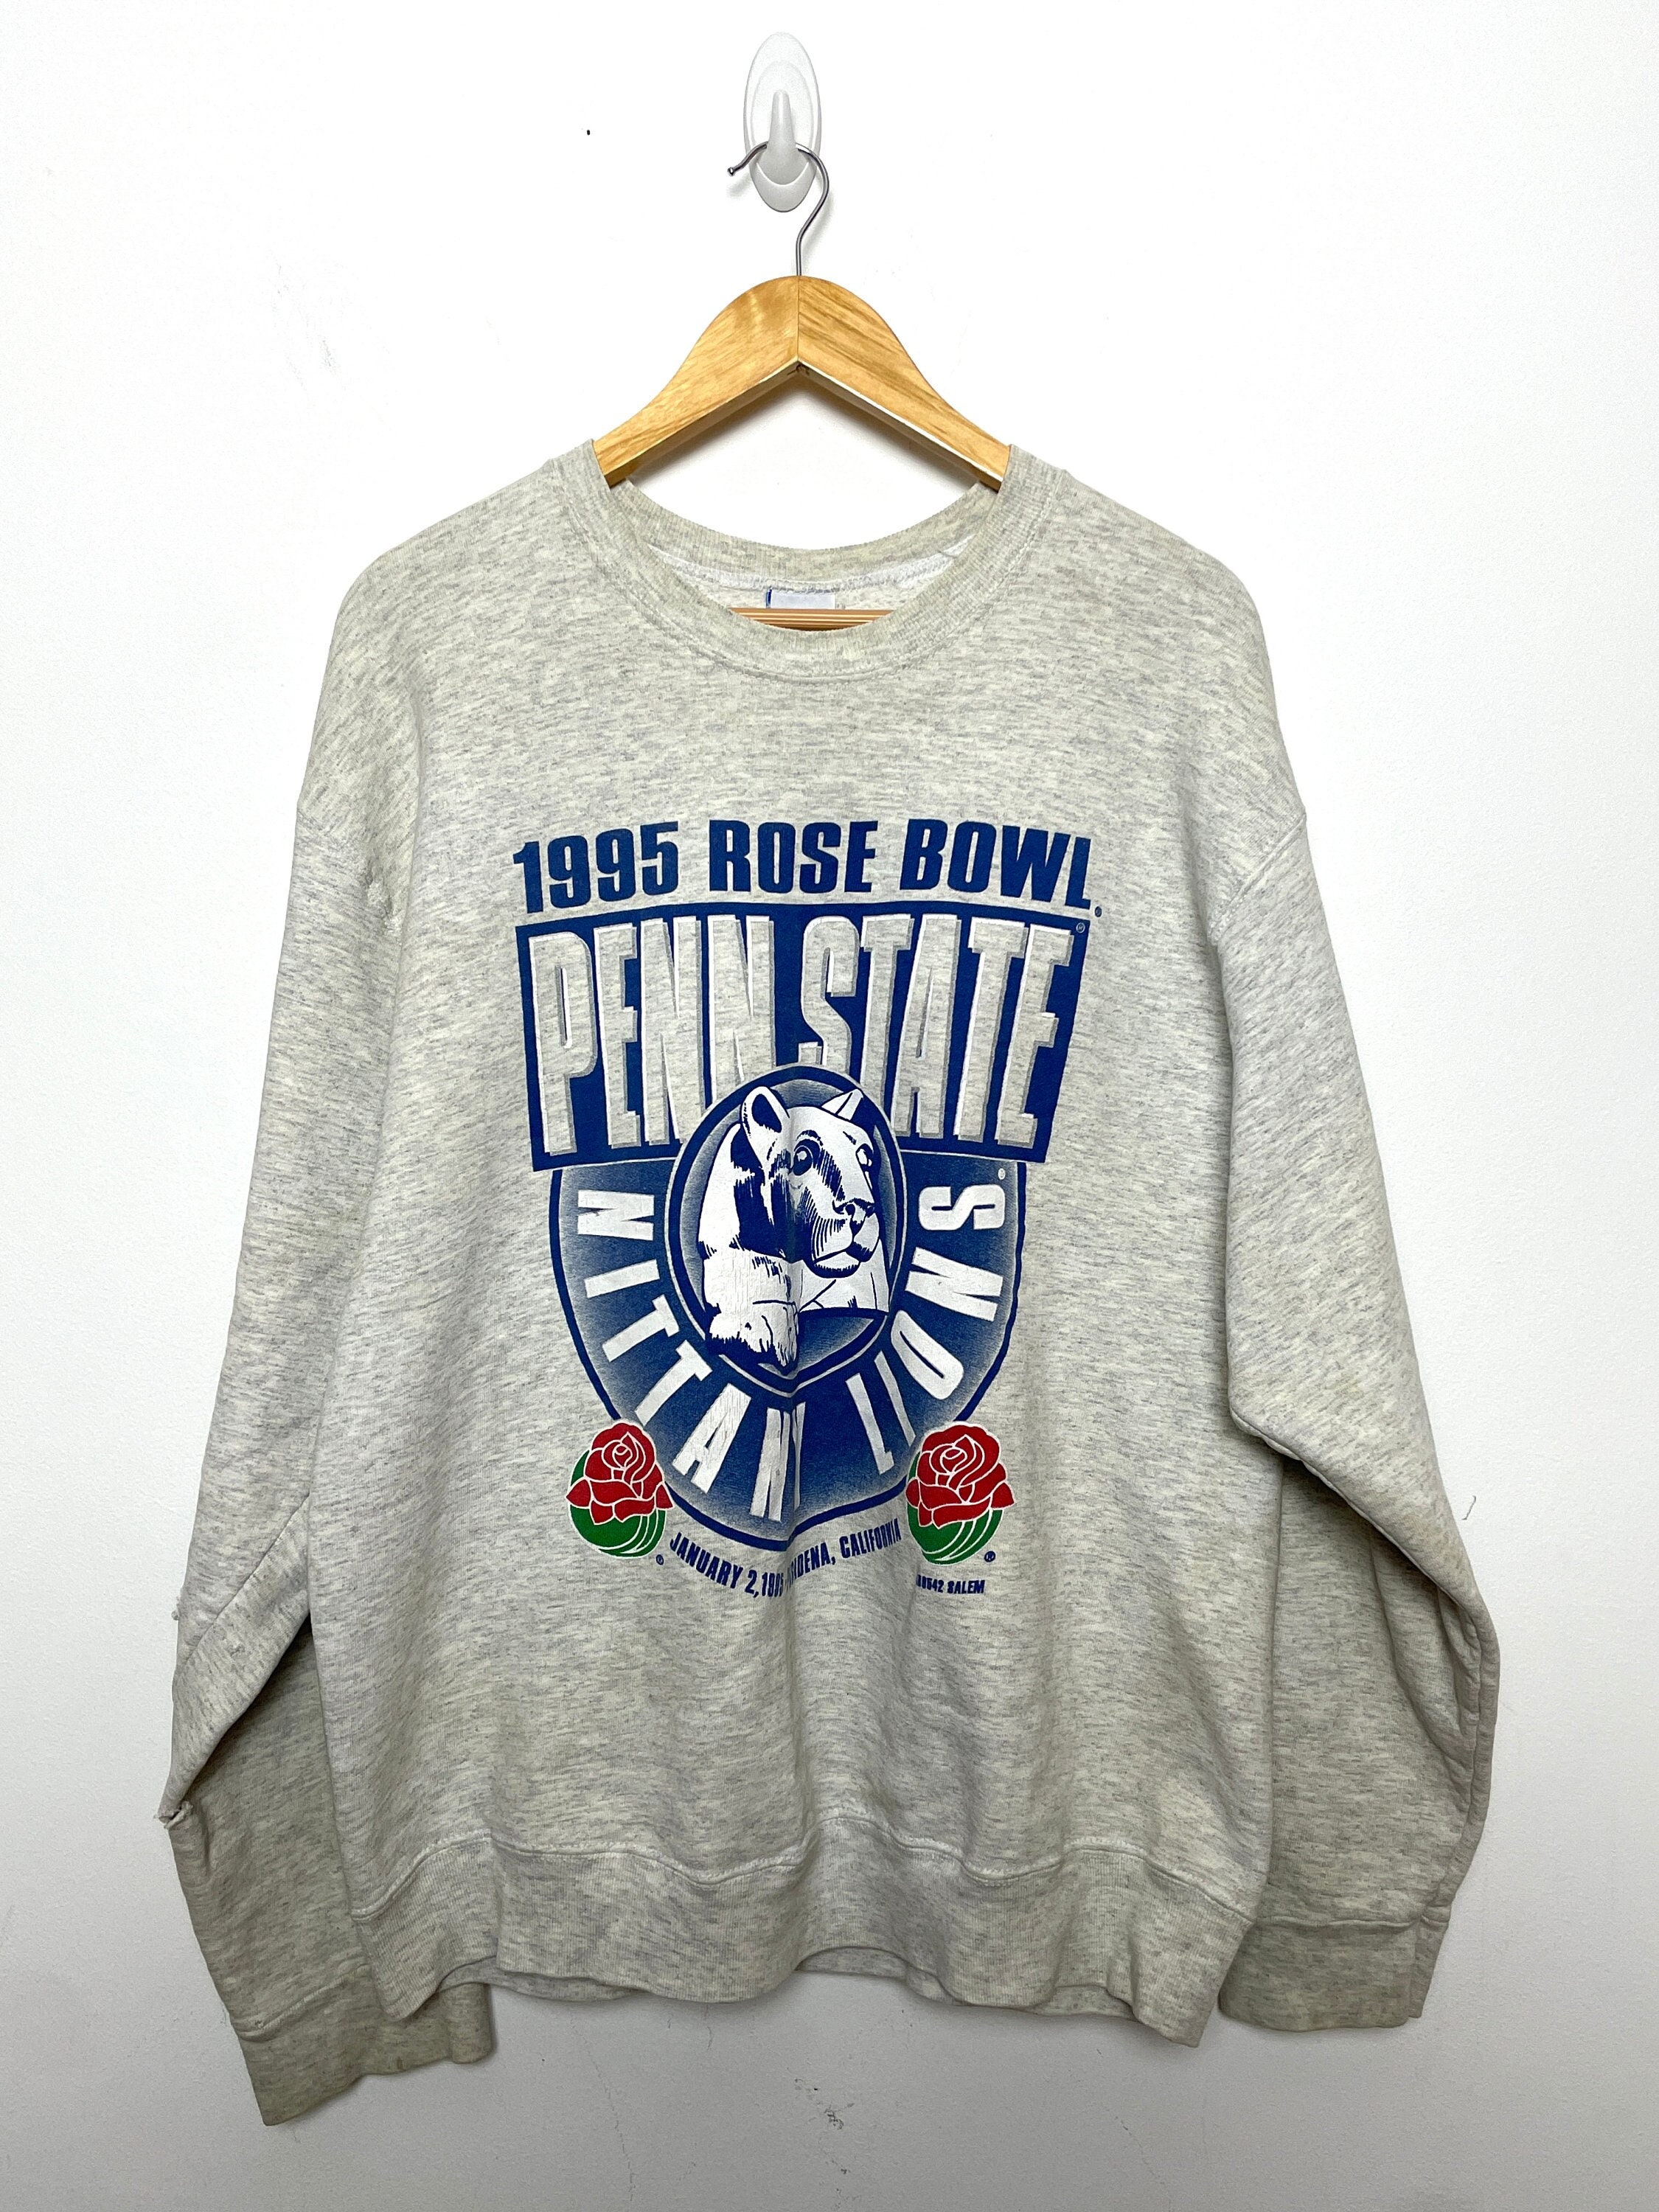 Penn State Rose Bowl Champs Gear & Apparel